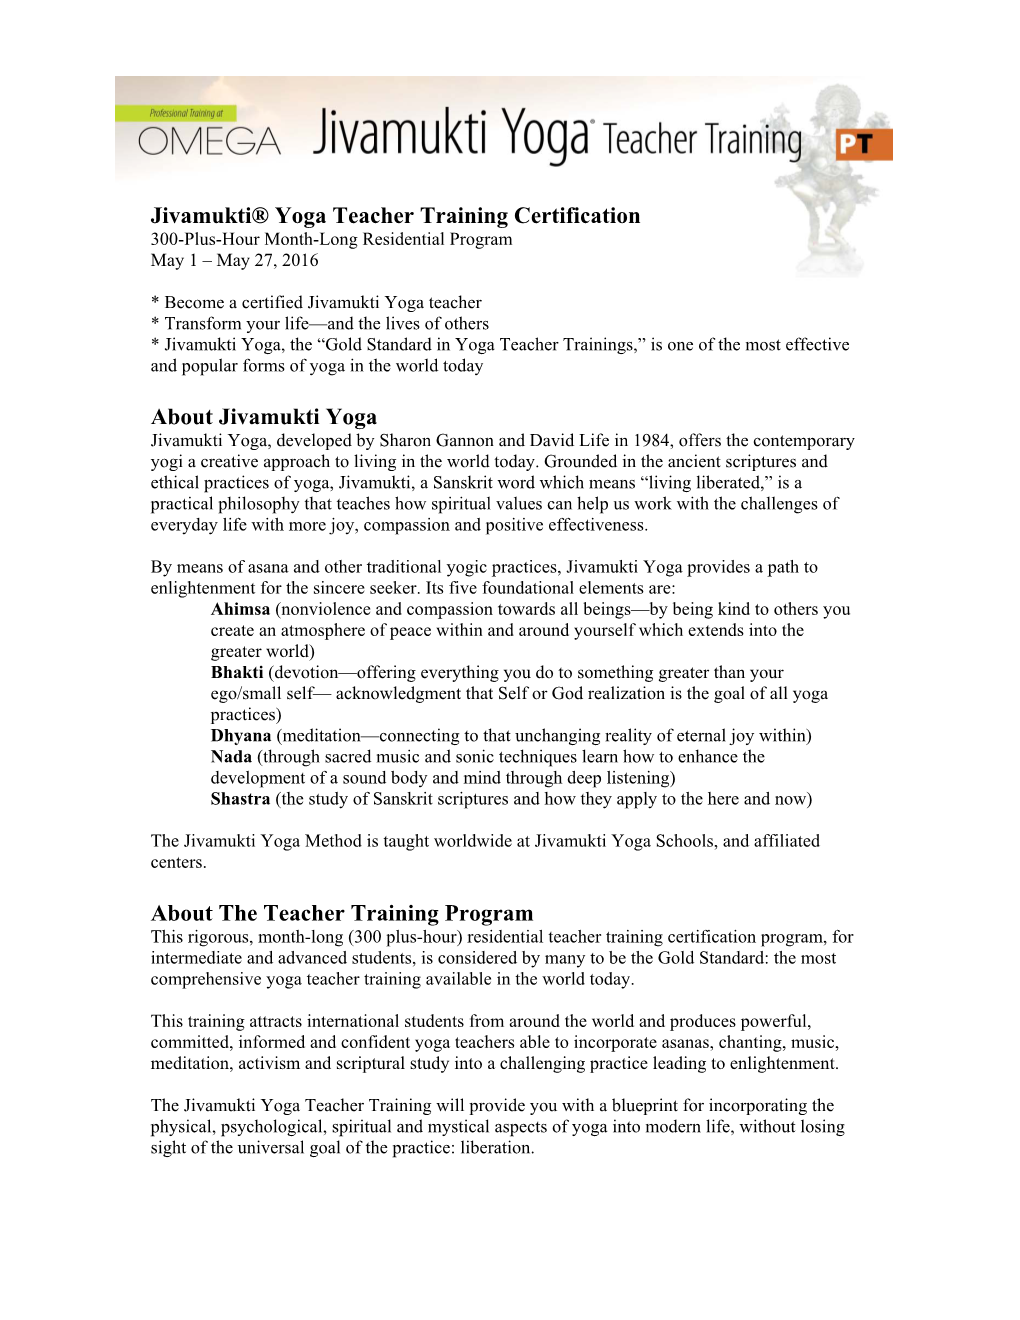 Jivamukti® Yoga Teacher Training Certification 300-Plus-Hour Month-Long Residential Program May 1 – May 27, 2016